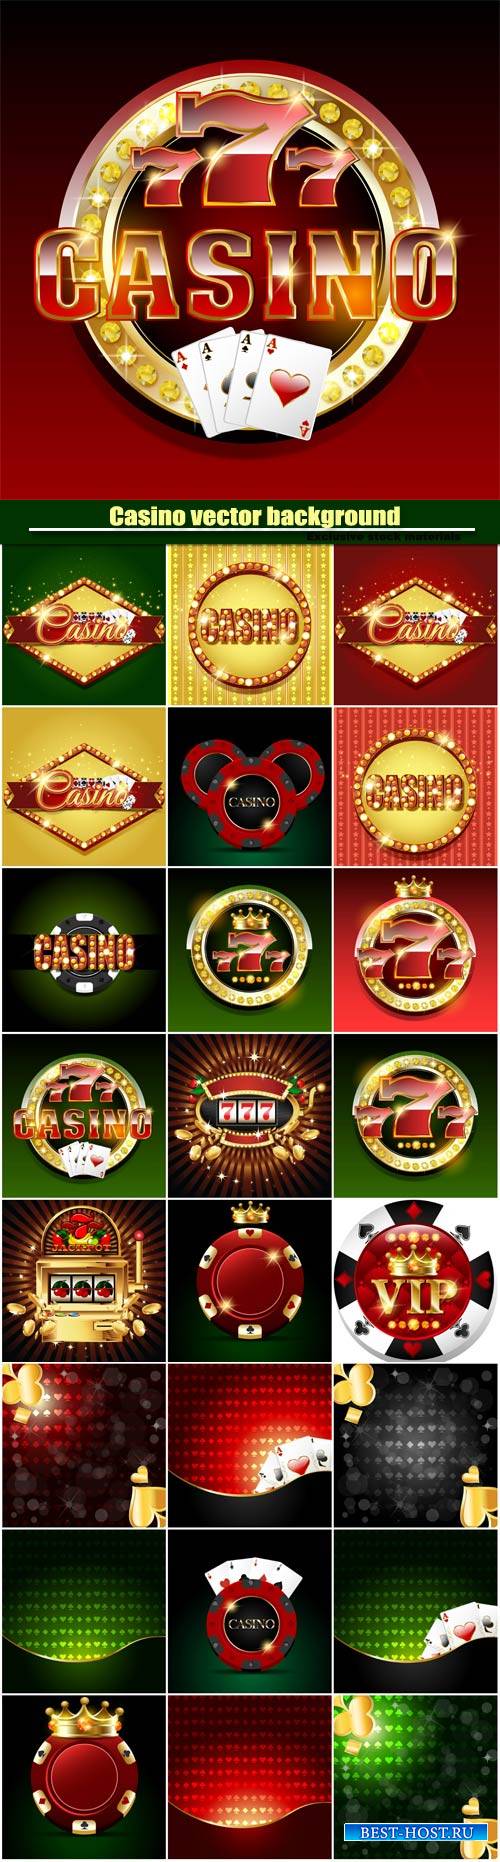 Casino vector background, slot machine on shiny background